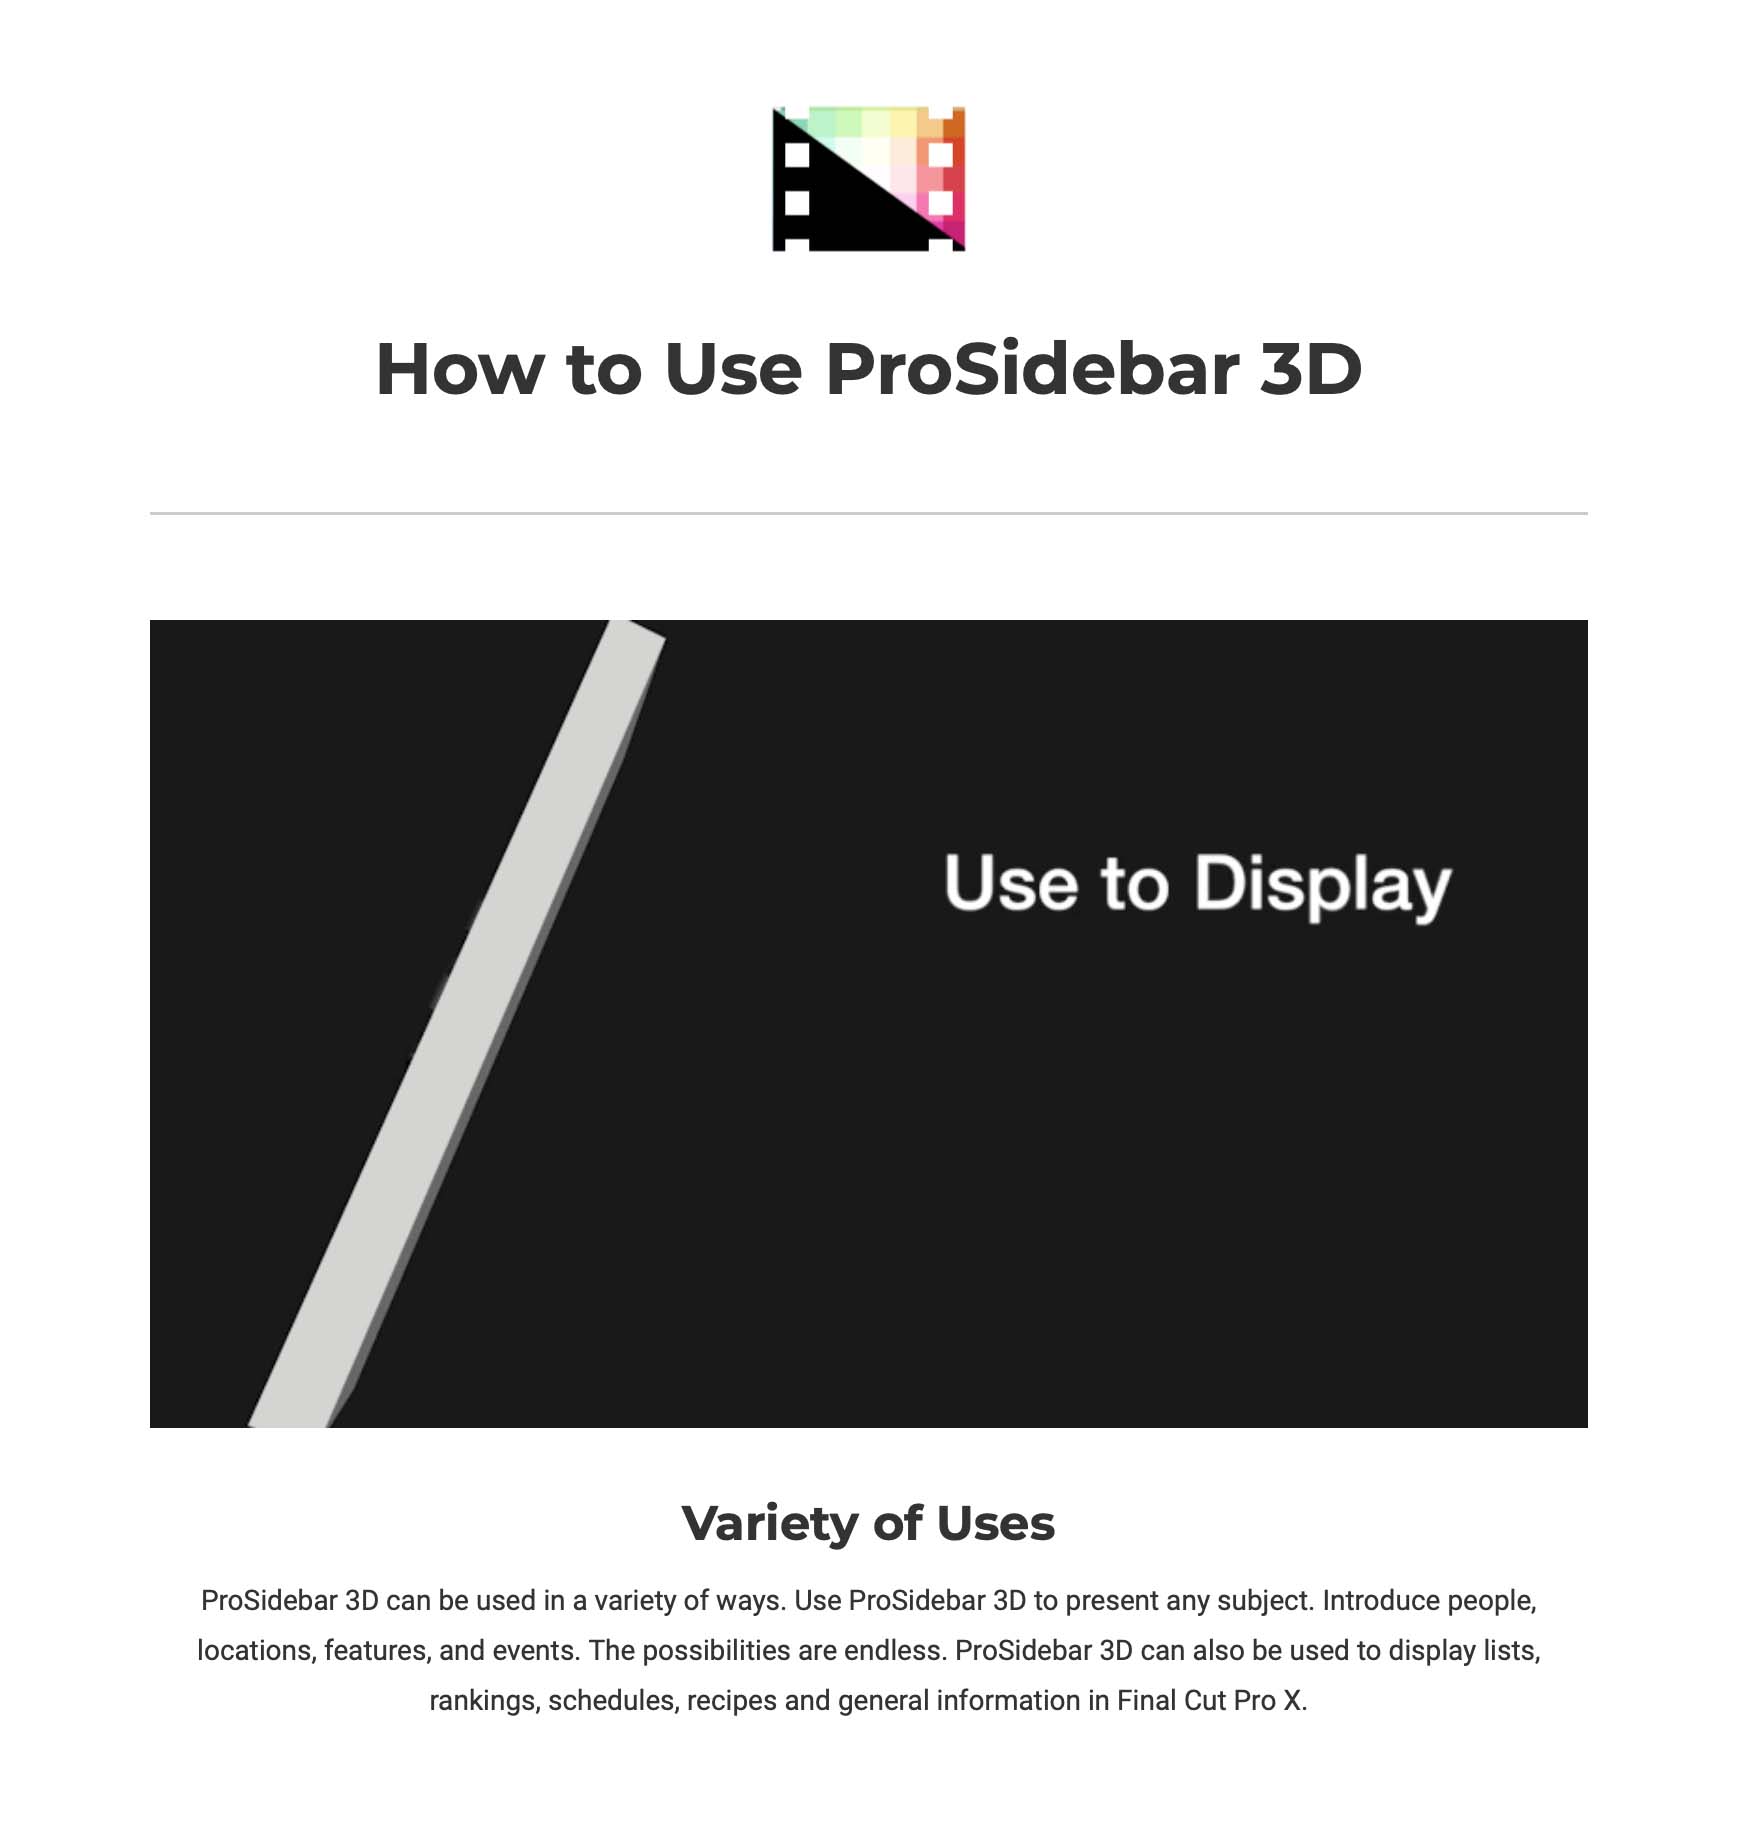 Pixel Film Studios - ProSidebar 3D Christmas - FCPX Plugins